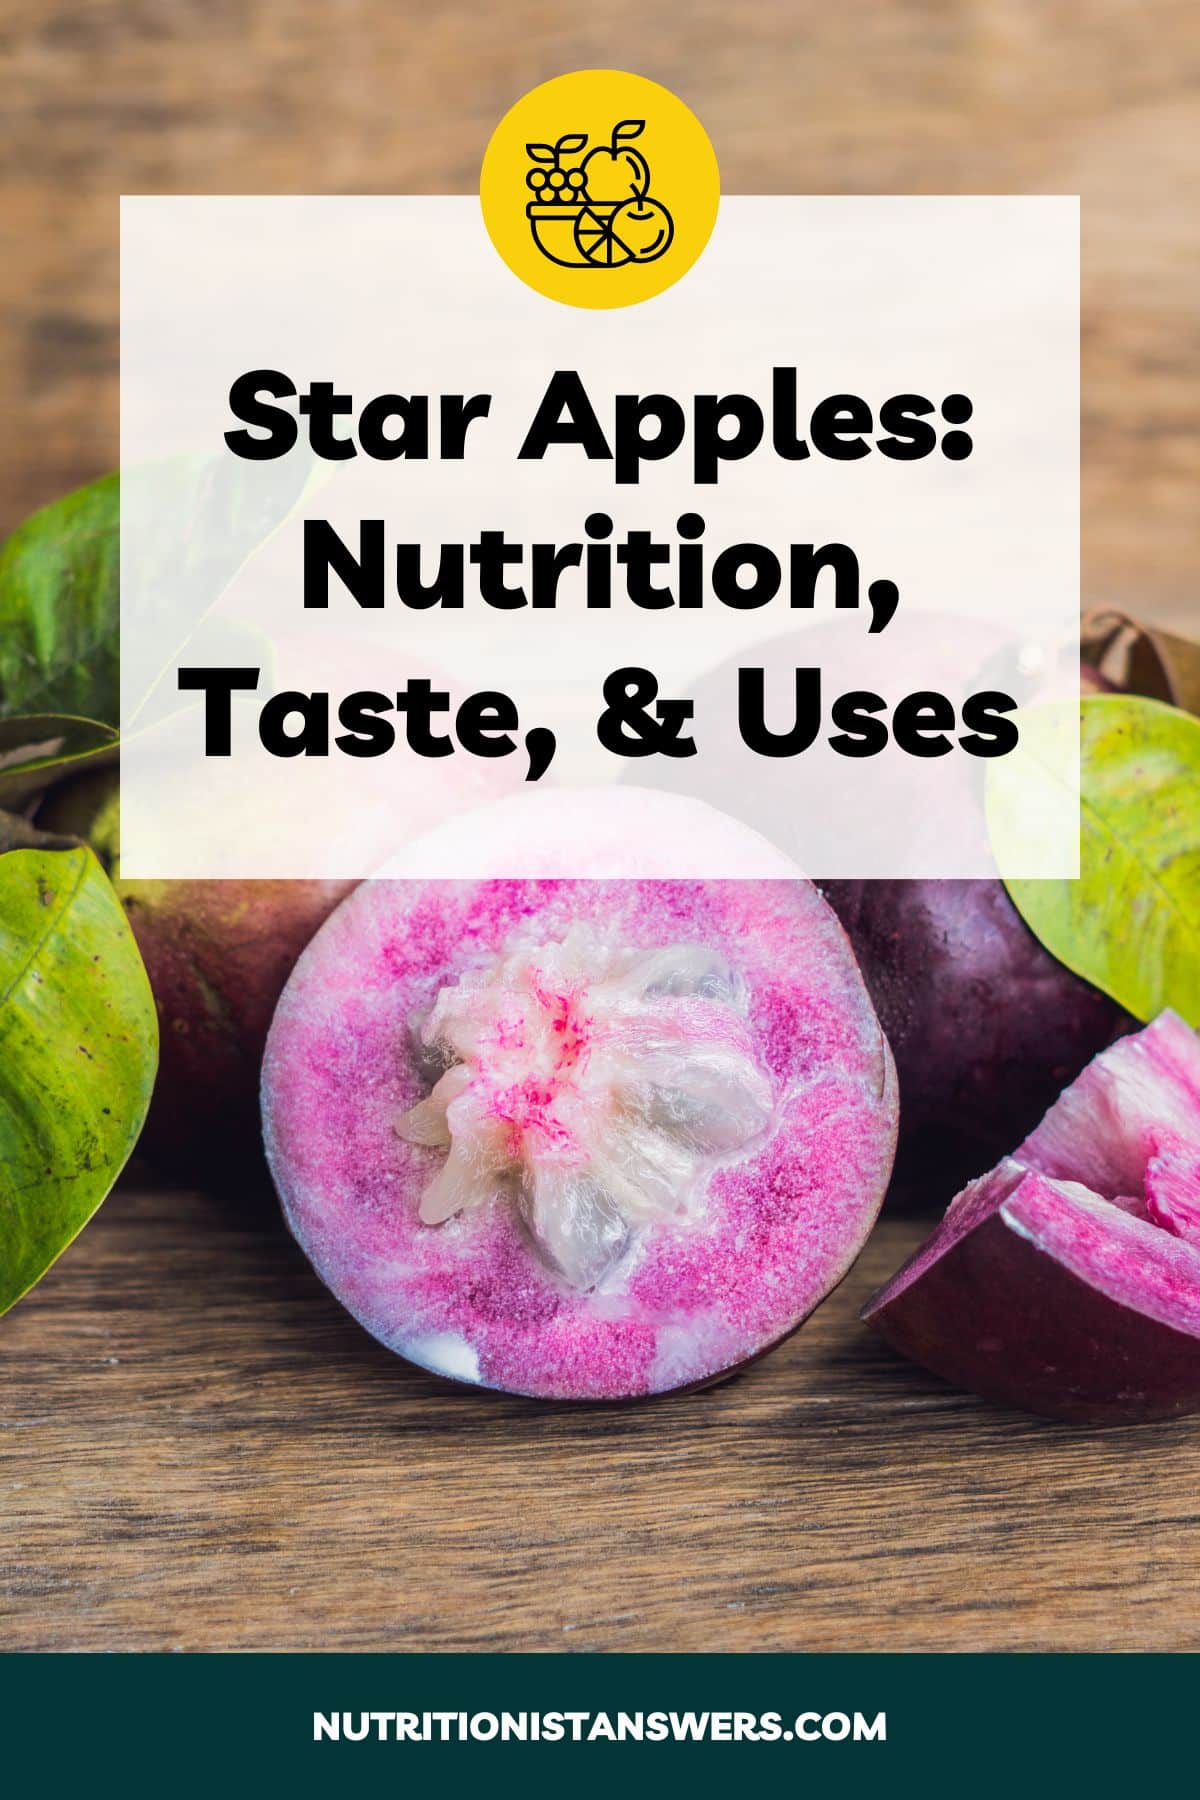 Star Apples: Nutrition, Taste, & Uses